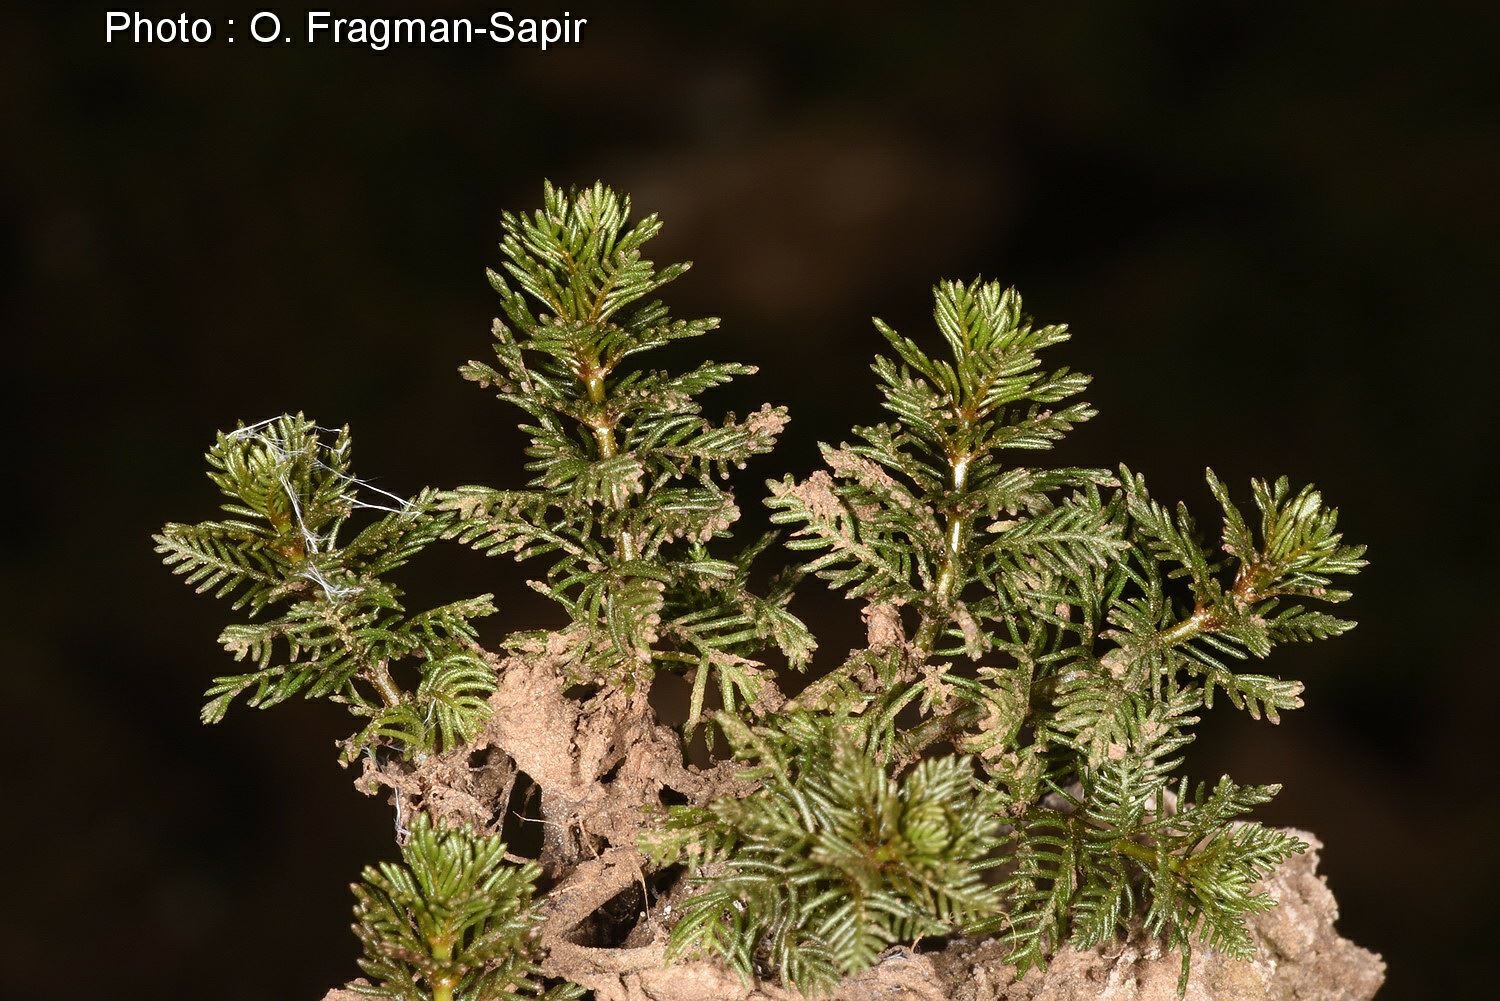 Myriophyllum spicatum - Eurasian Water-milfoil, Spiked Water-milfoil, אלף-העלה המשובל, אלף-עלה משובל